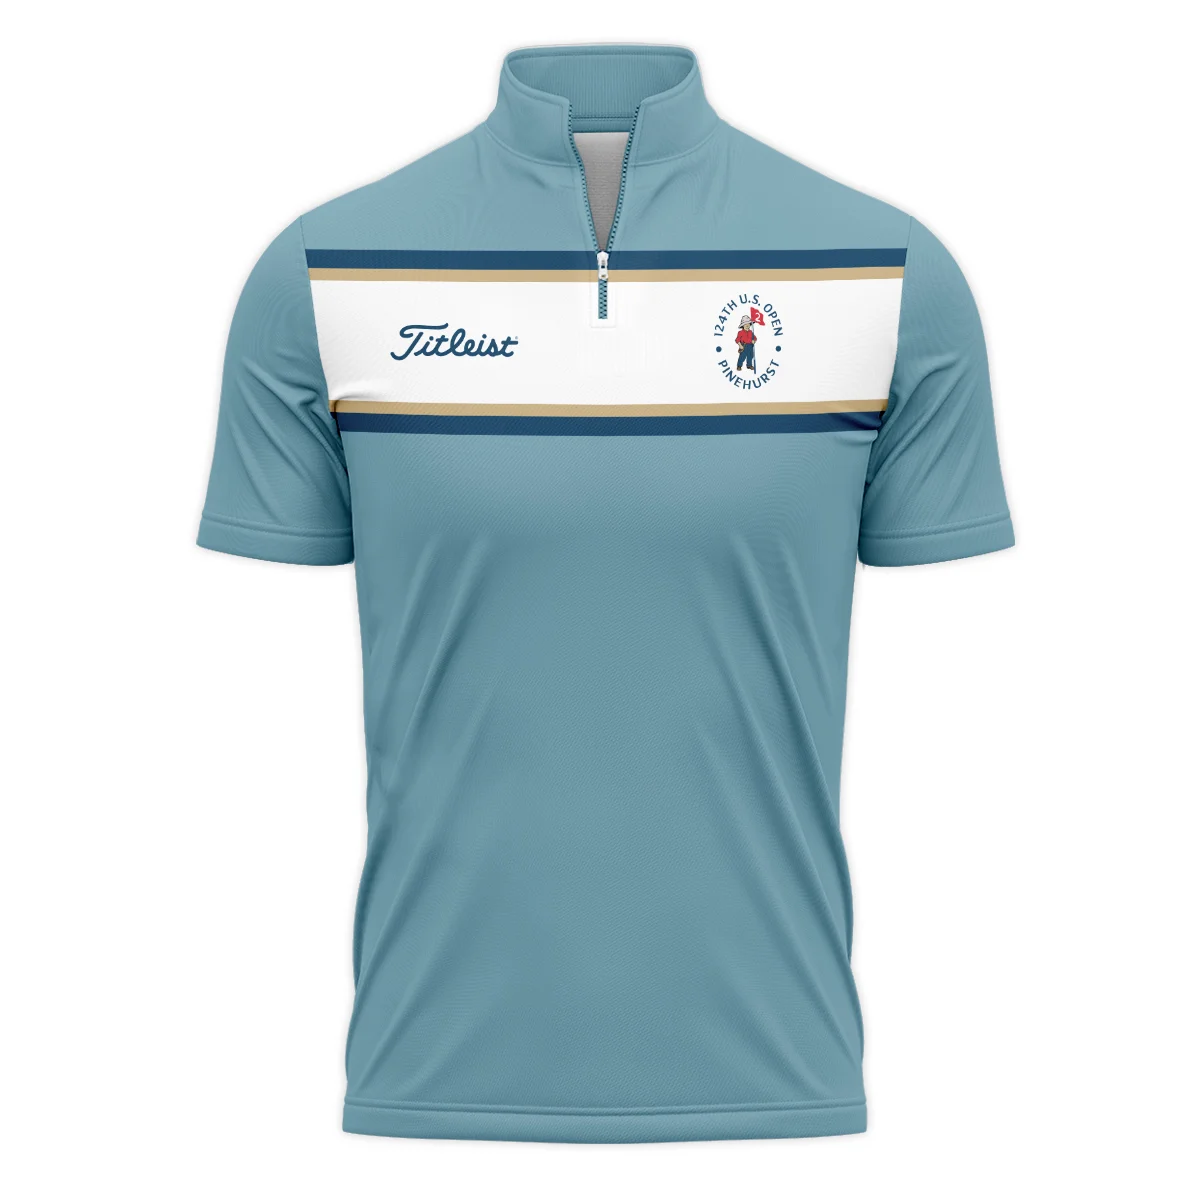 124th U.S. Open Pinehurst Golf Sport Mostly Desaturated Dark Blue Yellow Titleist Performance T-Shirt Style Classic